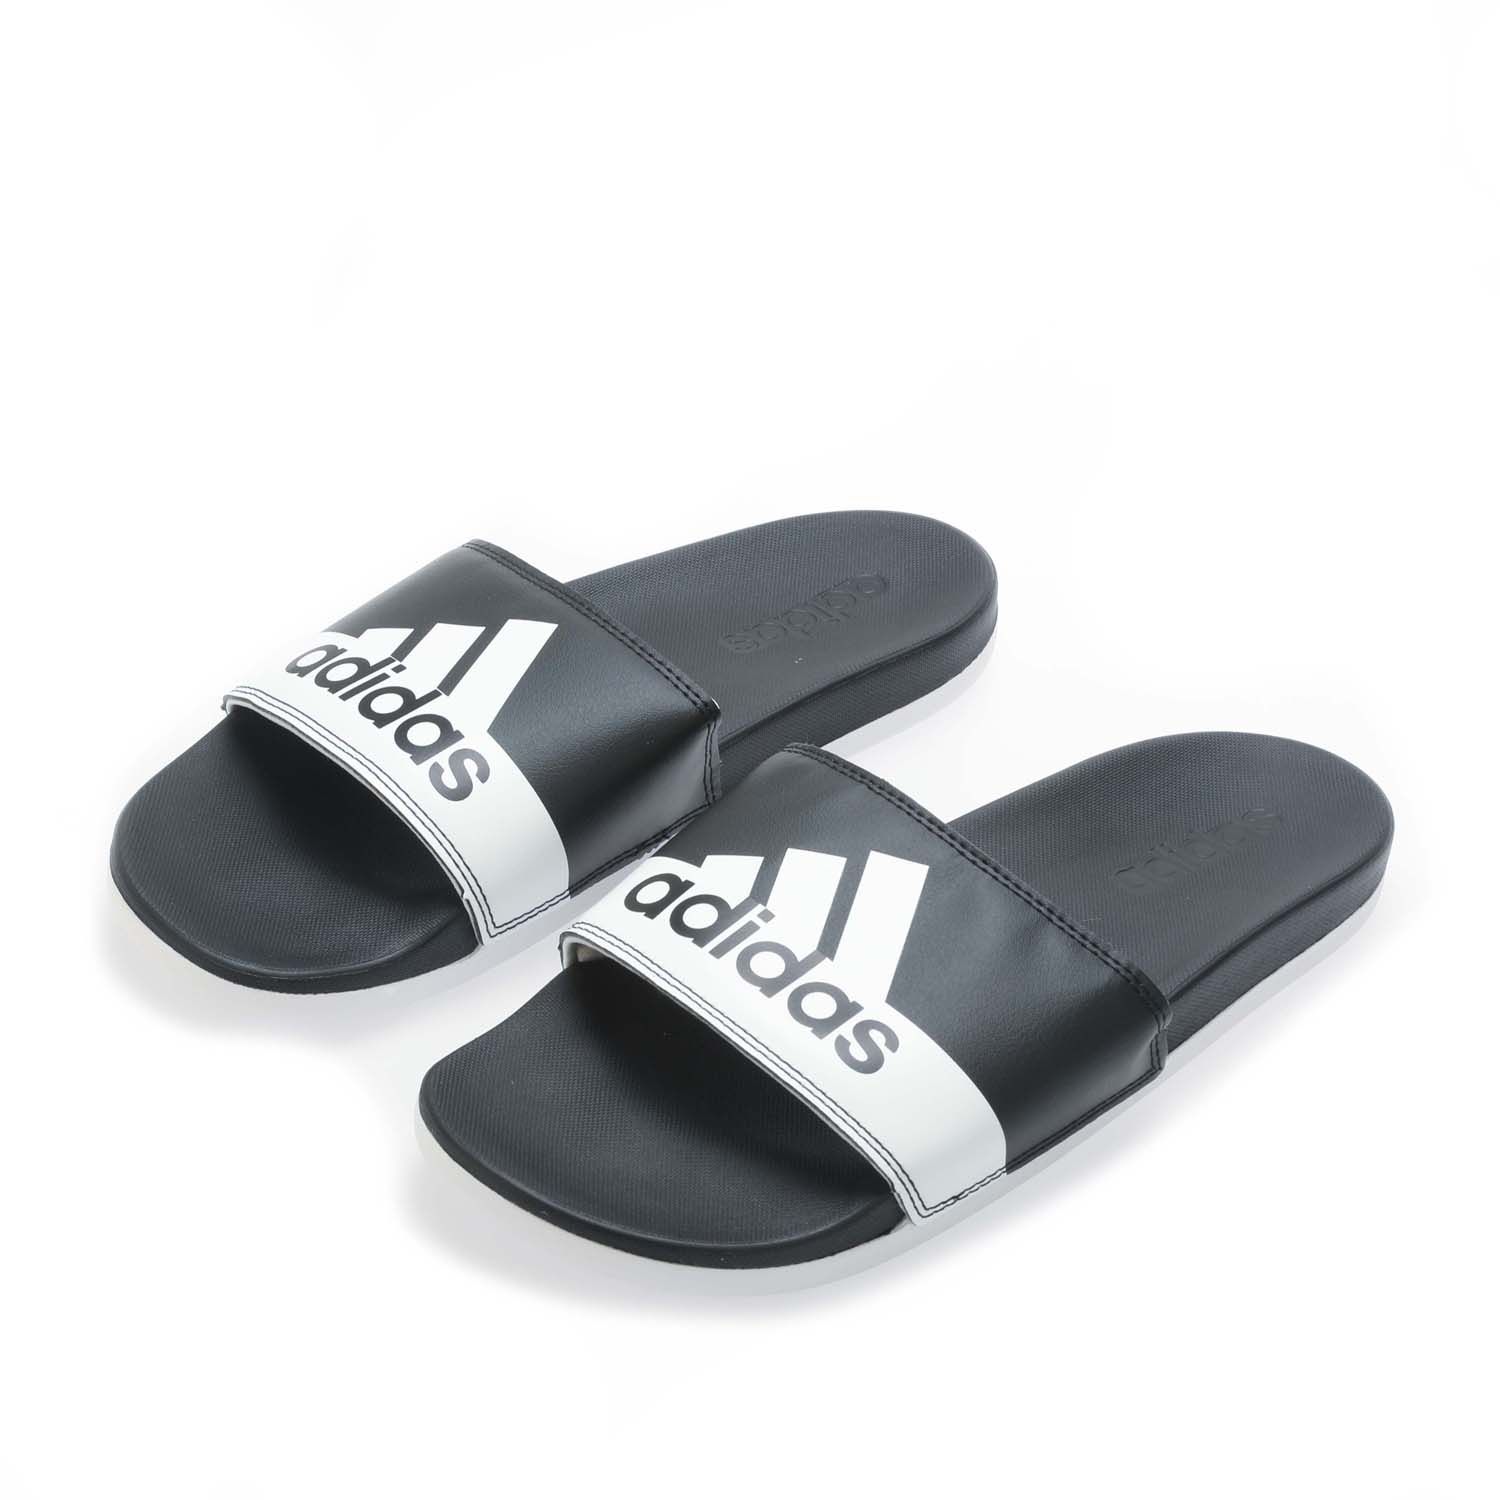 Mens Adilettte Comfort Sandals